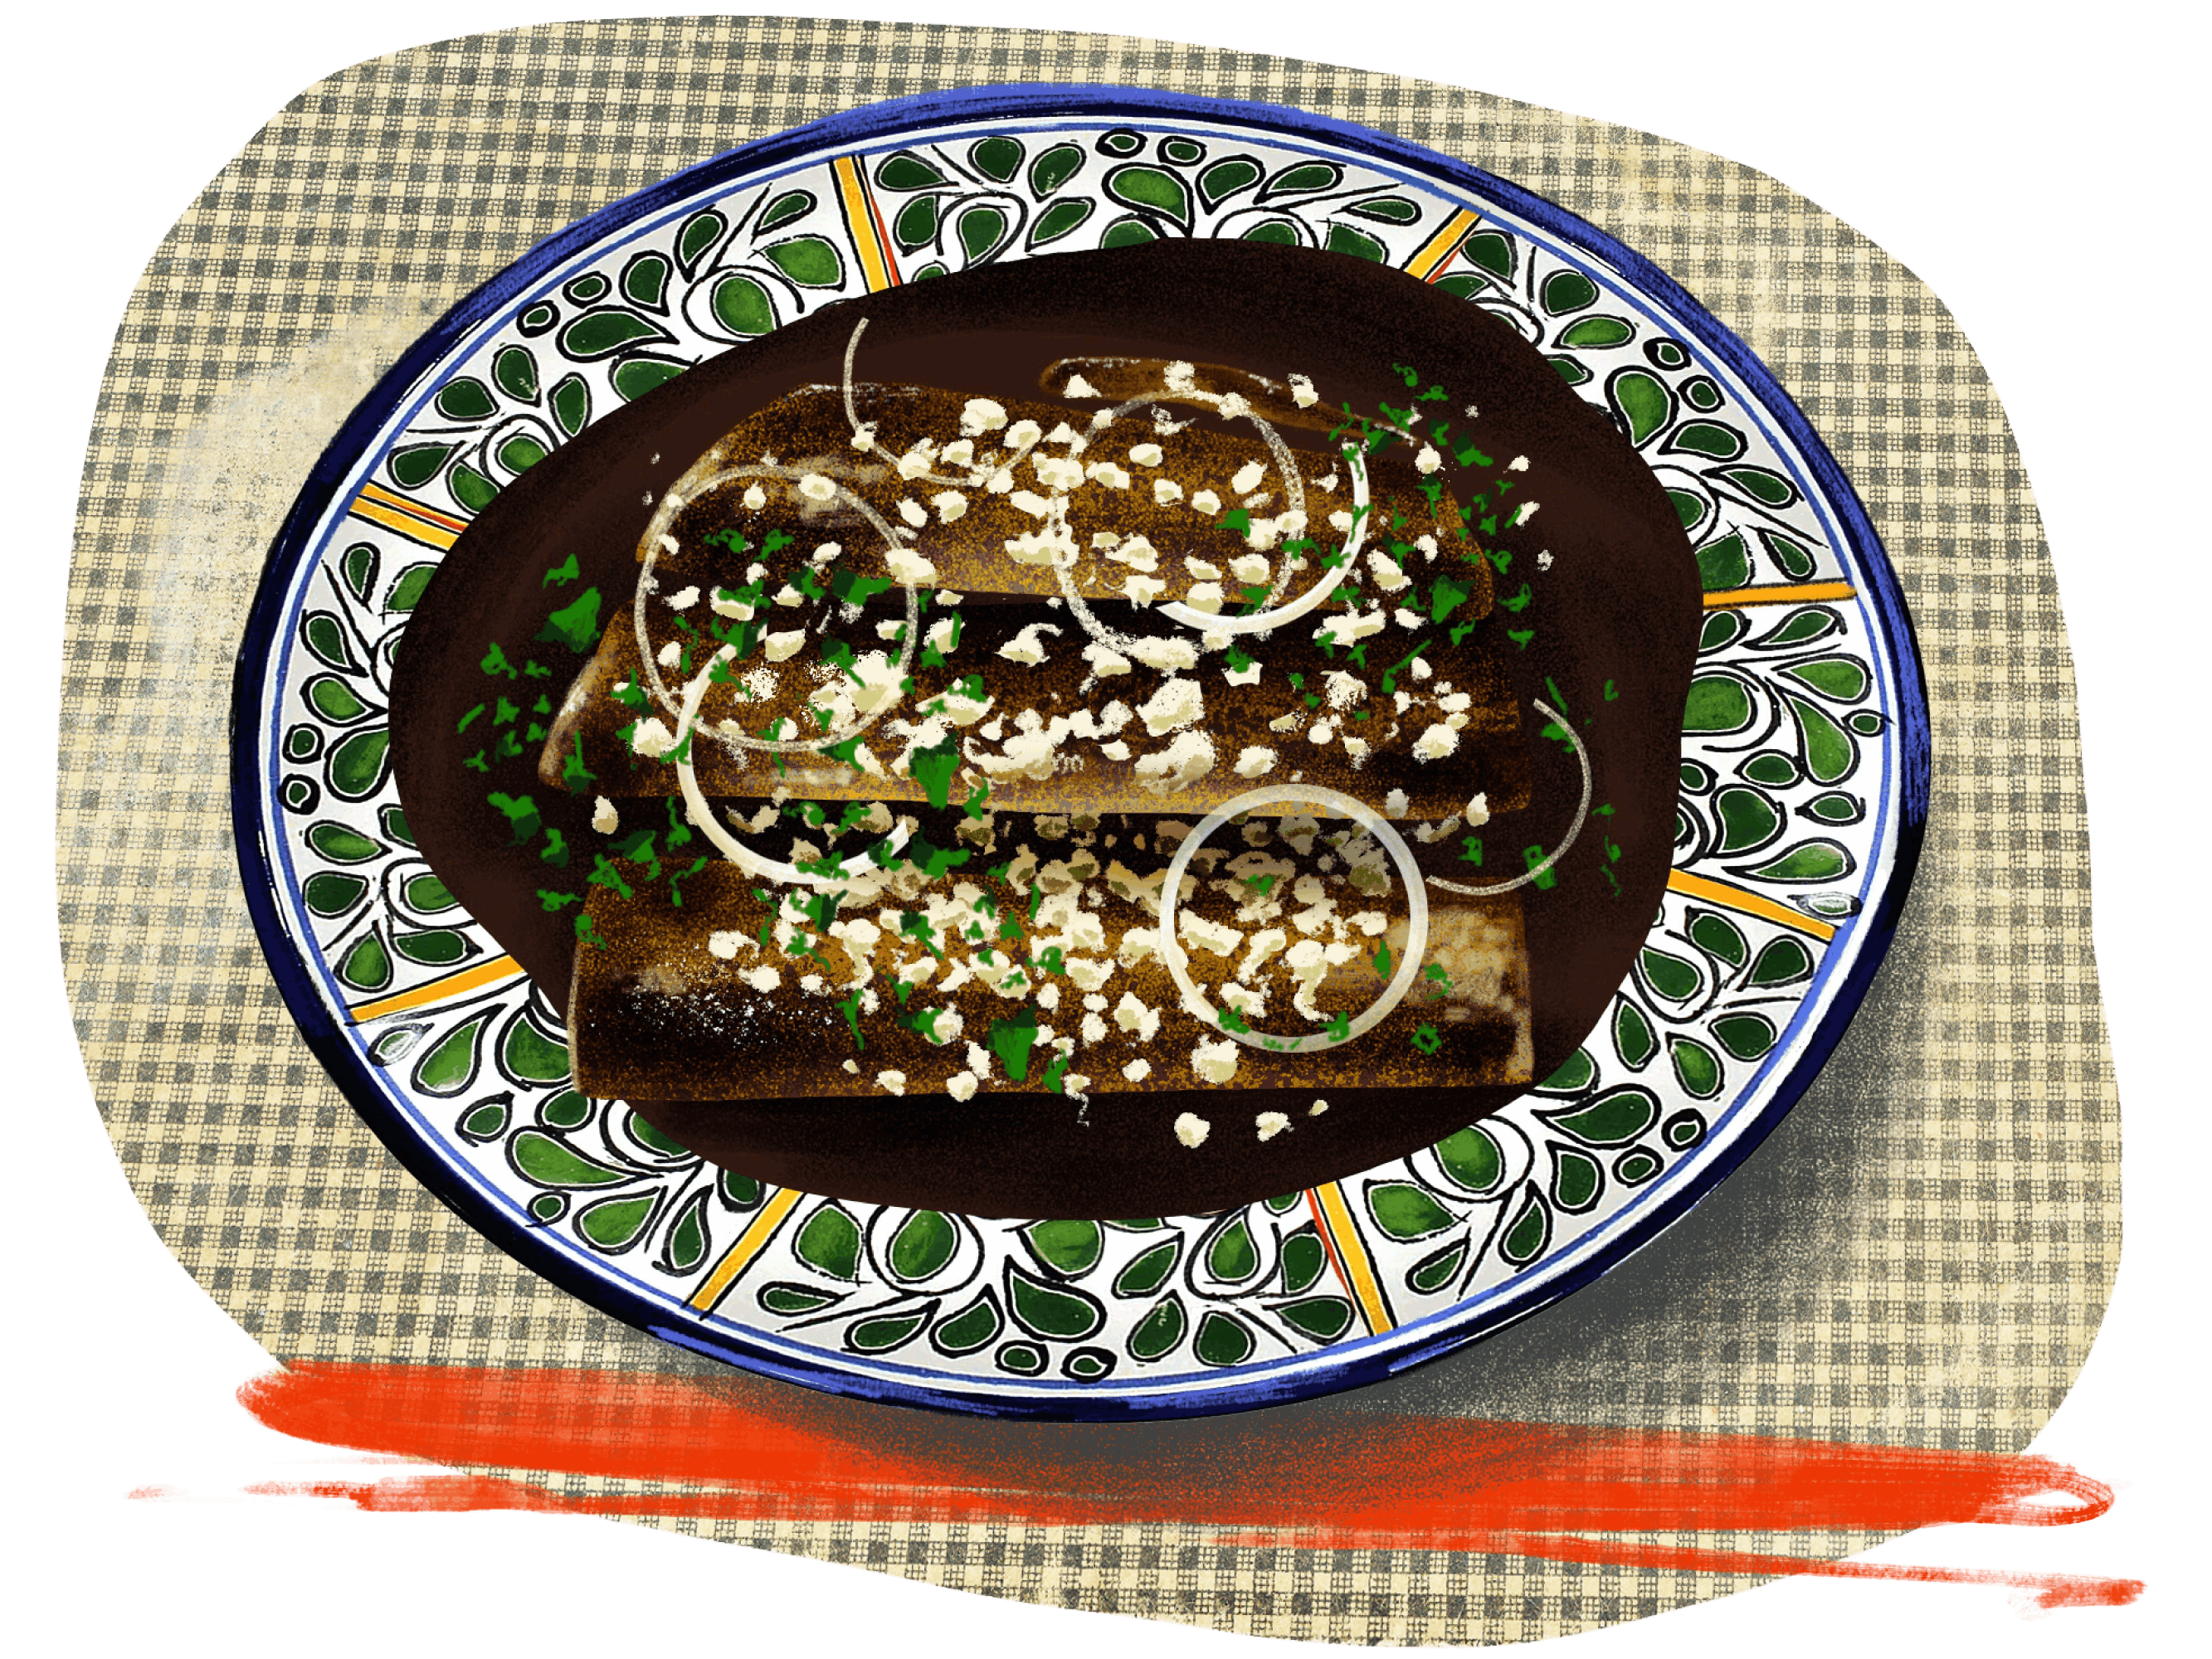 An illustration of enchiladas in a bean sauce.